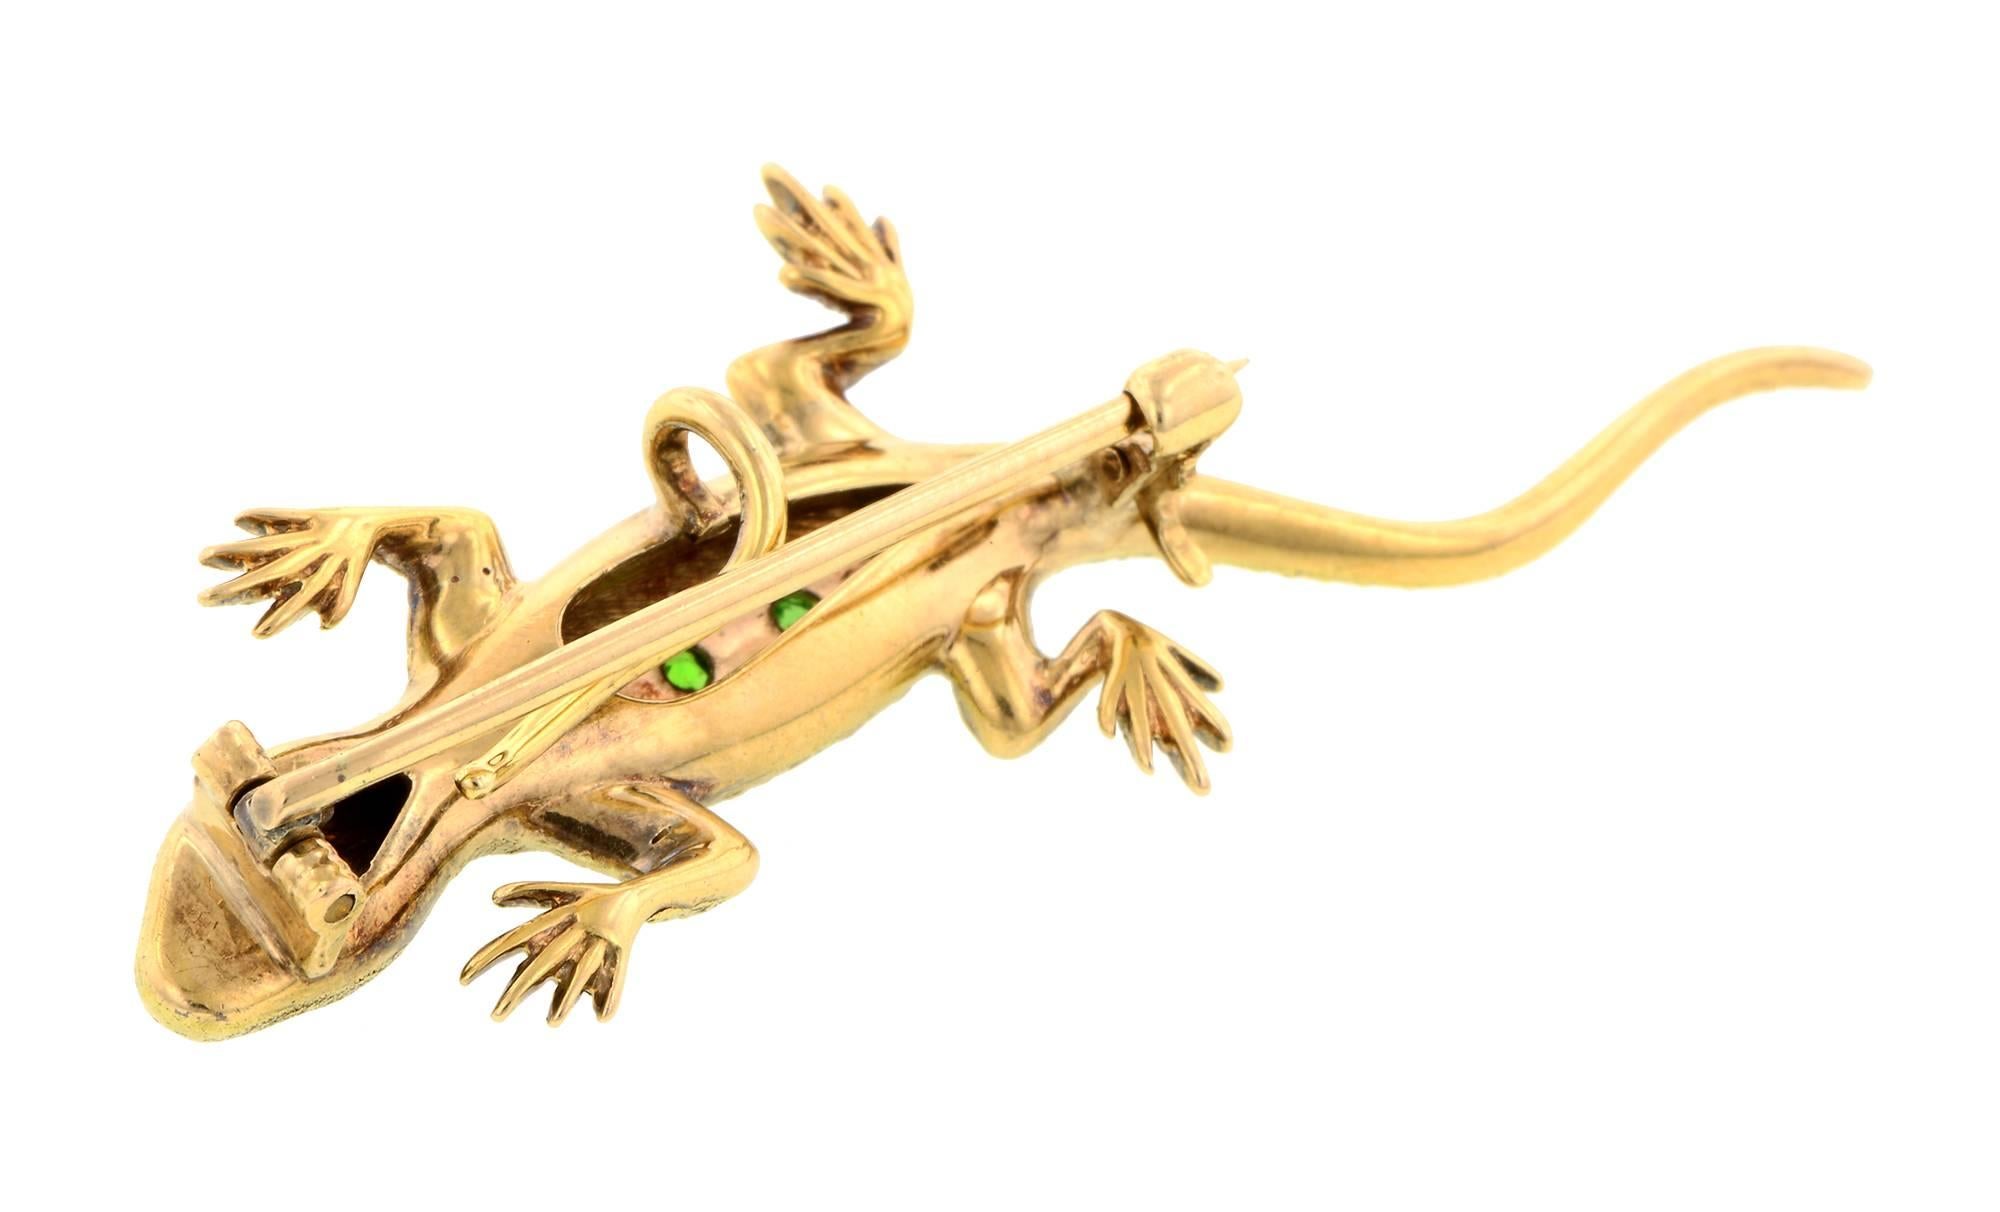 Antique demantoid garnet salamander pin measuring app. 2 x 3/4 inches, featuring seven demantoid garnets measuring app. 1.0 - 1.5mm and two Old European cut diamond eyes weighing app. 0.02ctw., in an engraved salamandar brooch, fashioned in 14k.